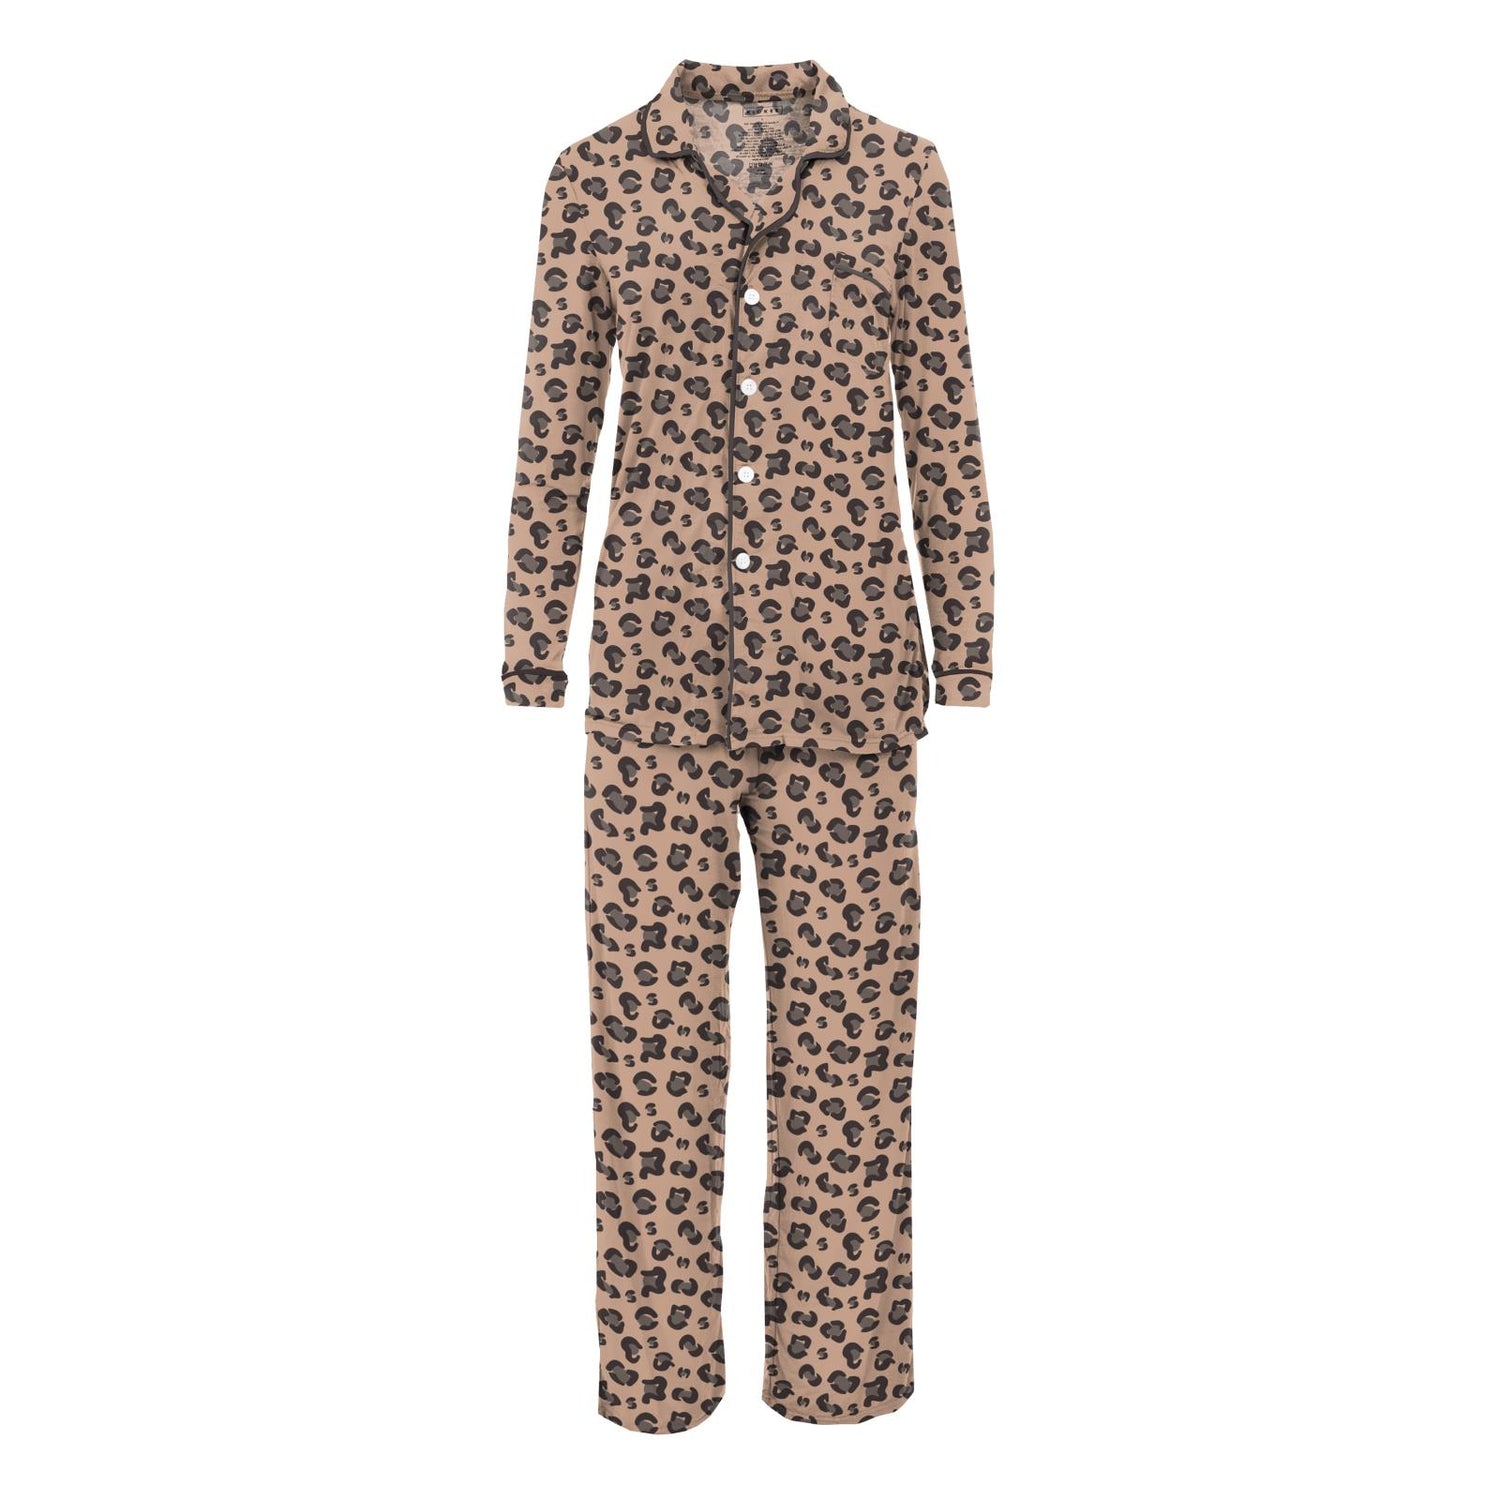 Women's Print Long Sleeve Collared Pajama Set in Suede Cheetah Print